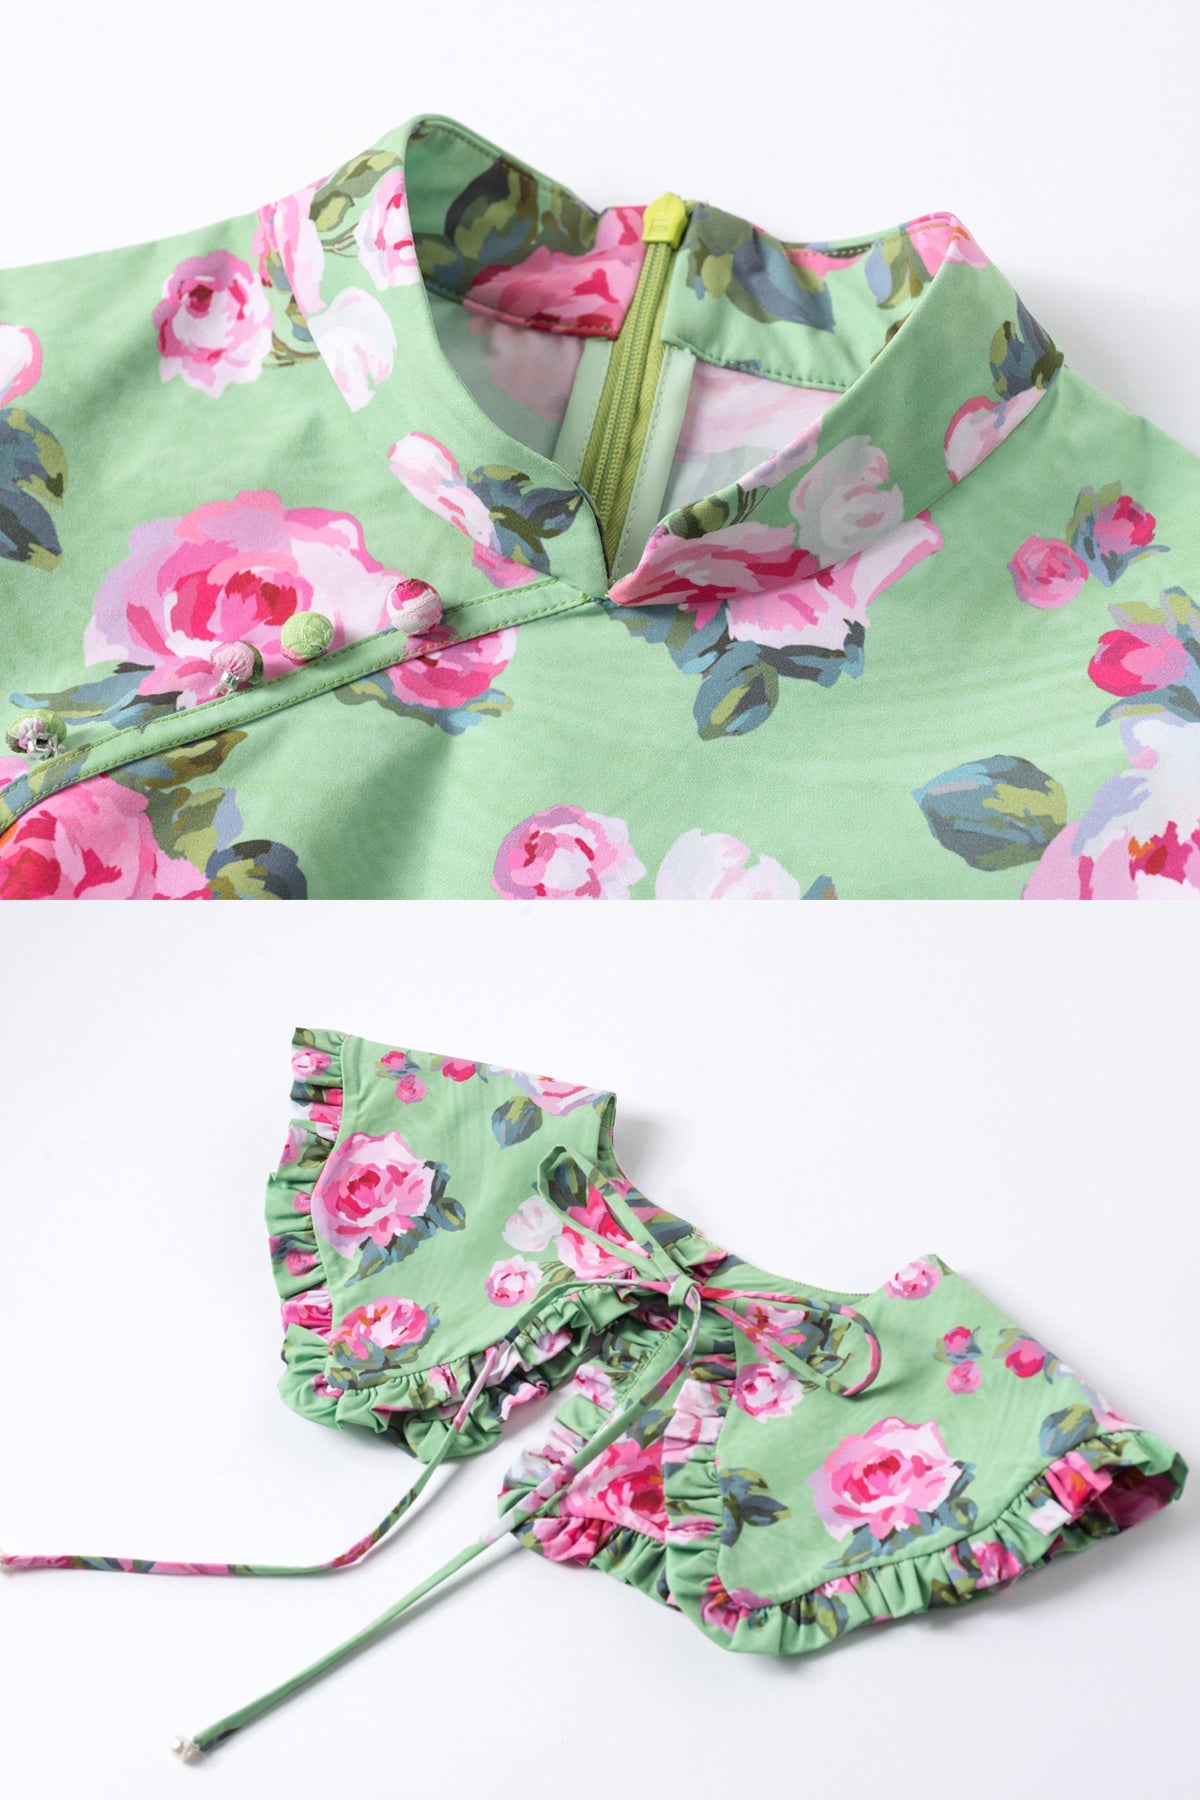 Mukzin | Floral Baby Collar Dress  - Tiger Sniffing Rose